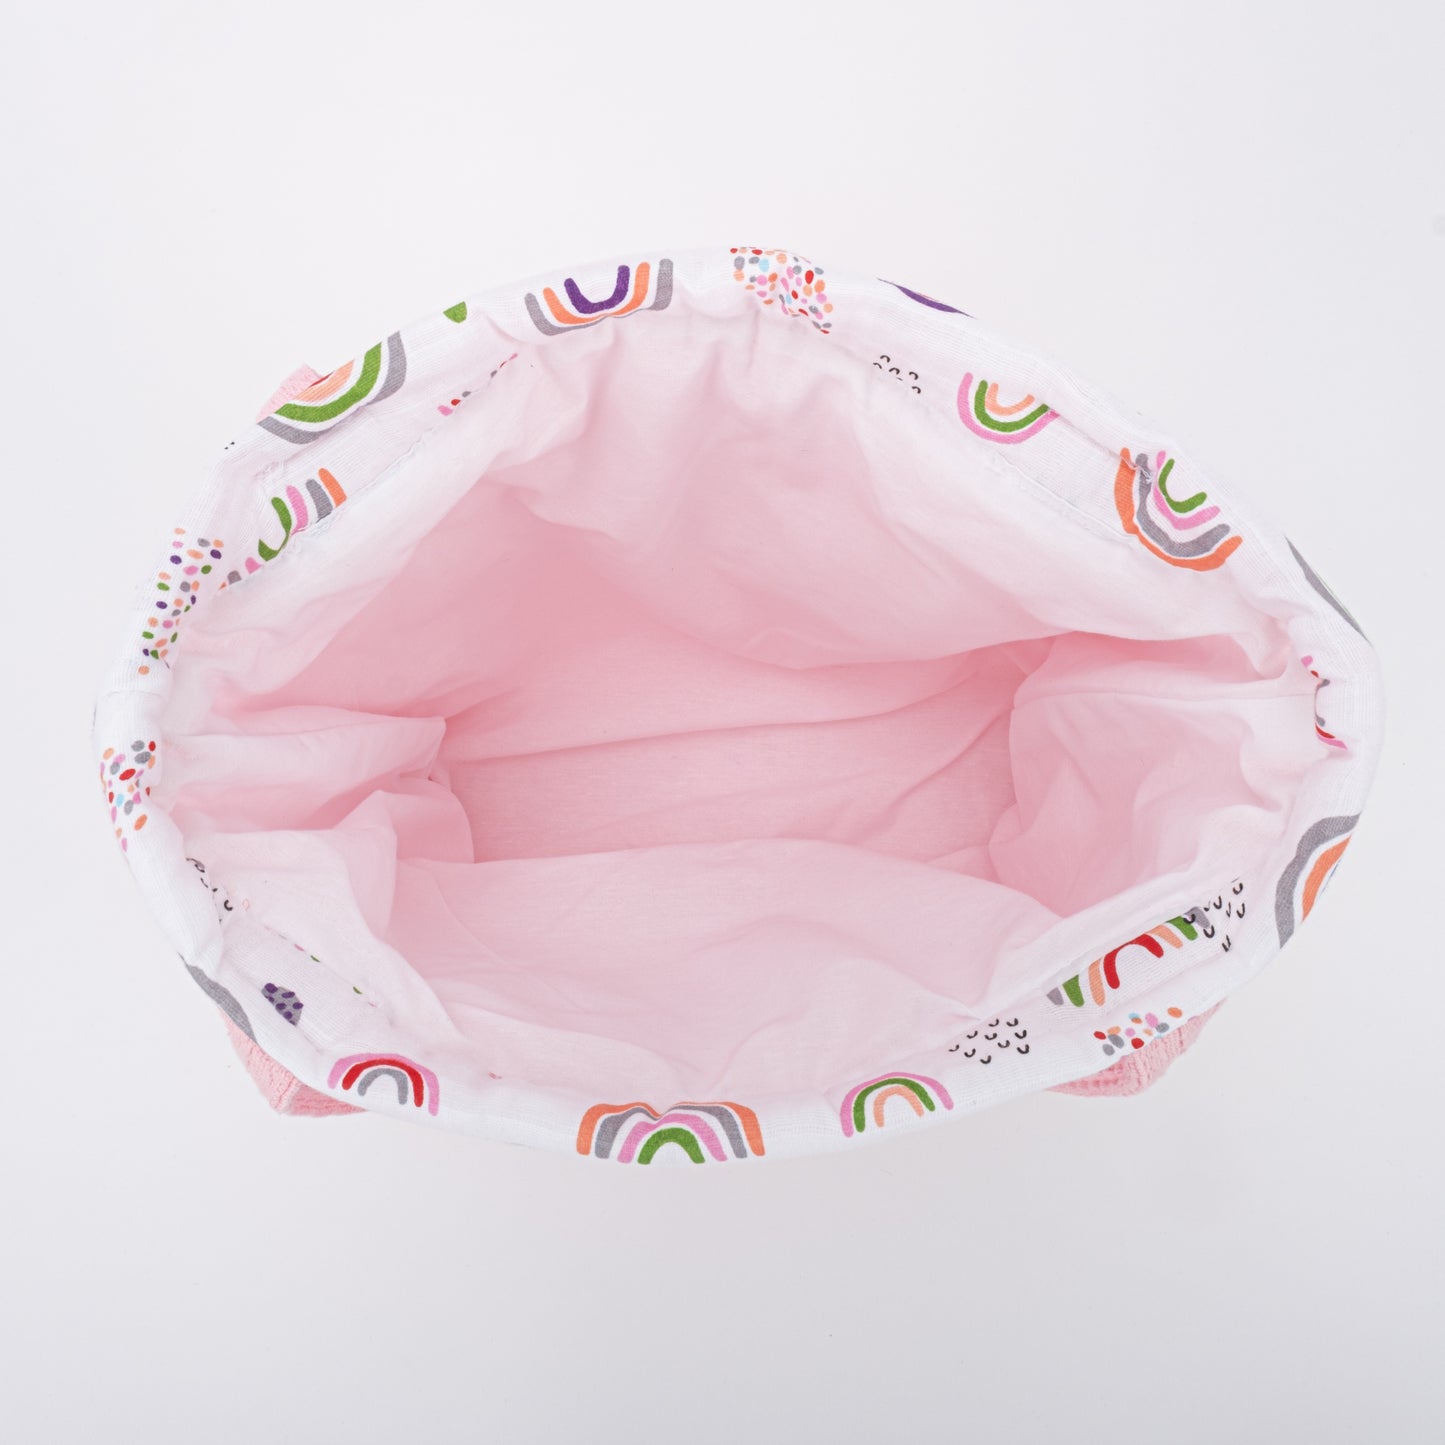 Baby Care Bag - Pink Knitting - Pink Tiny Rainbow